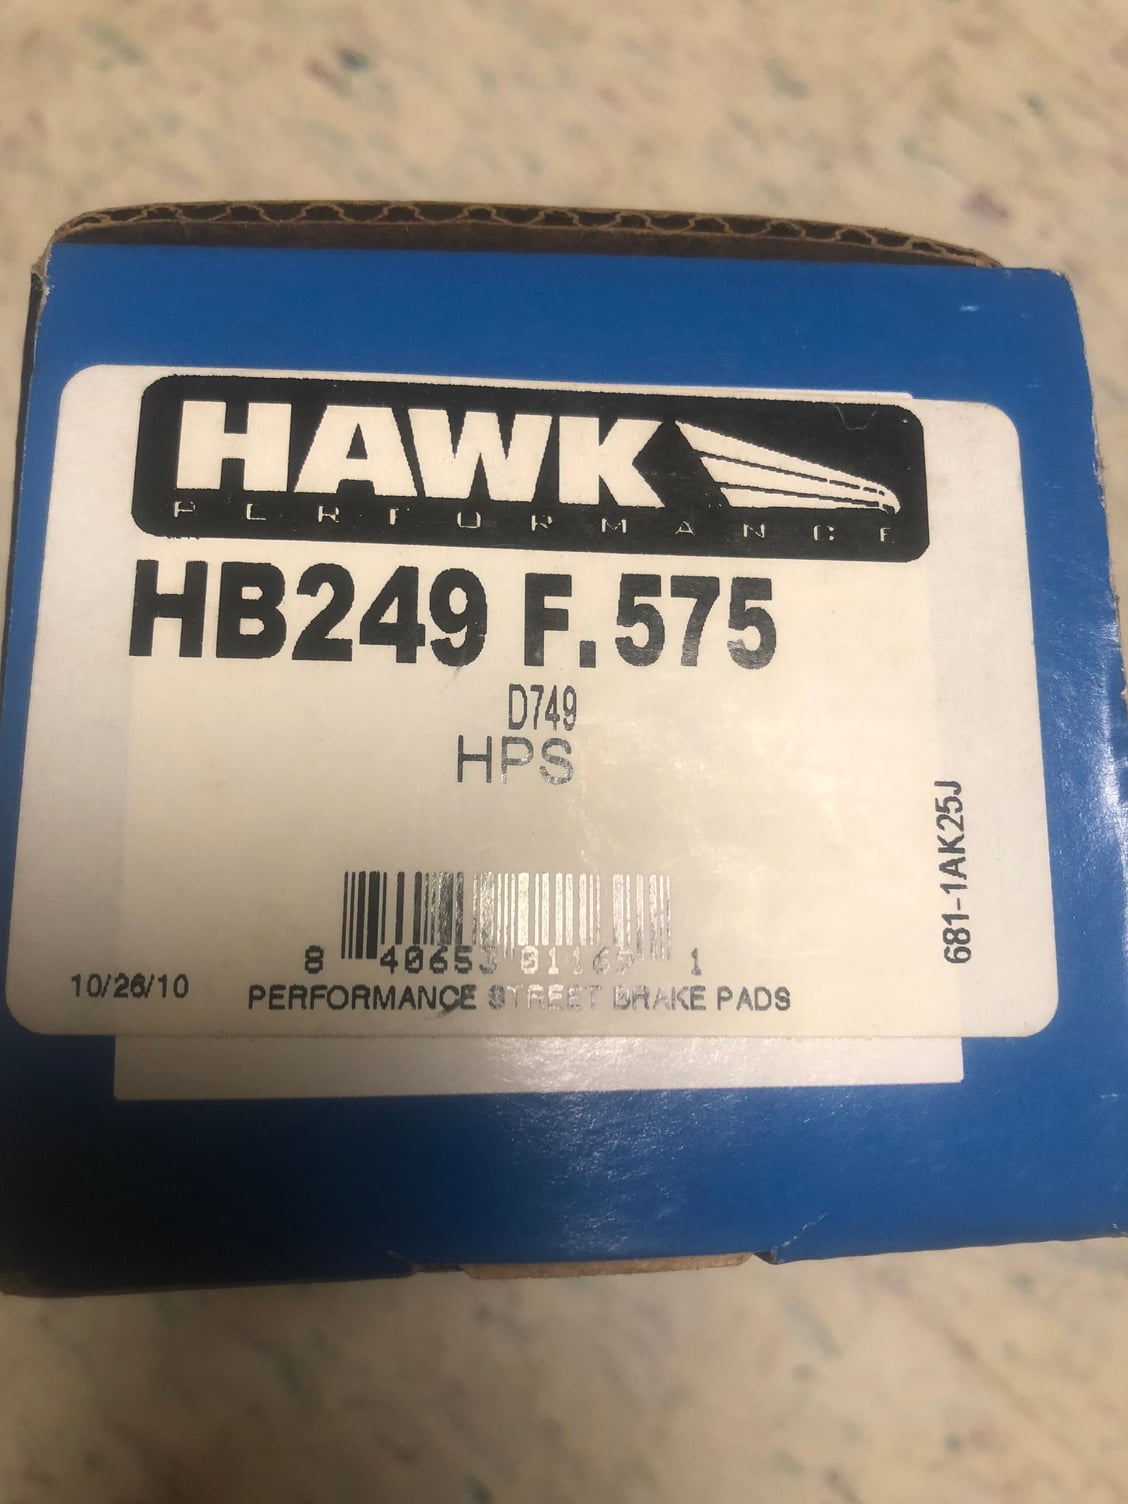  - 98-02 Fbody front hawk brake pads***SOLD*** - Long Island, NY 11040, United States